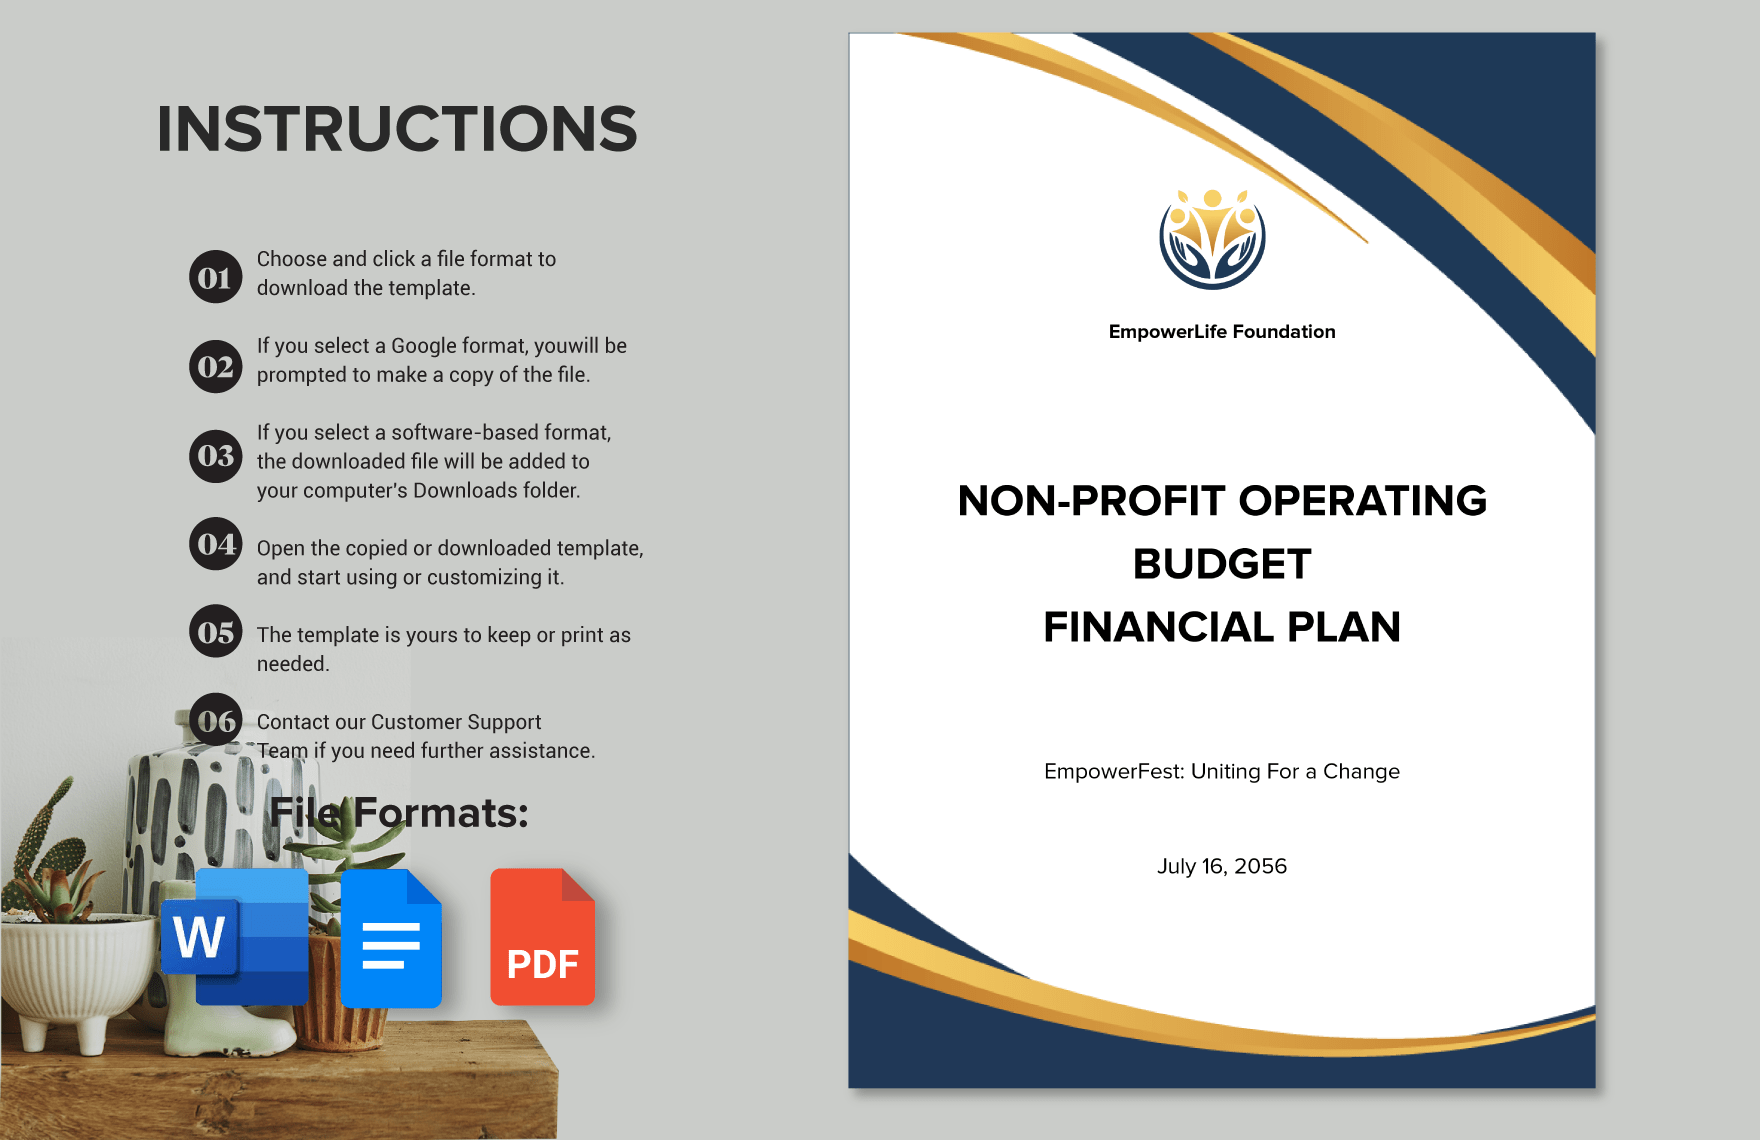 NonProfit Operating Budget Financial Plan Template